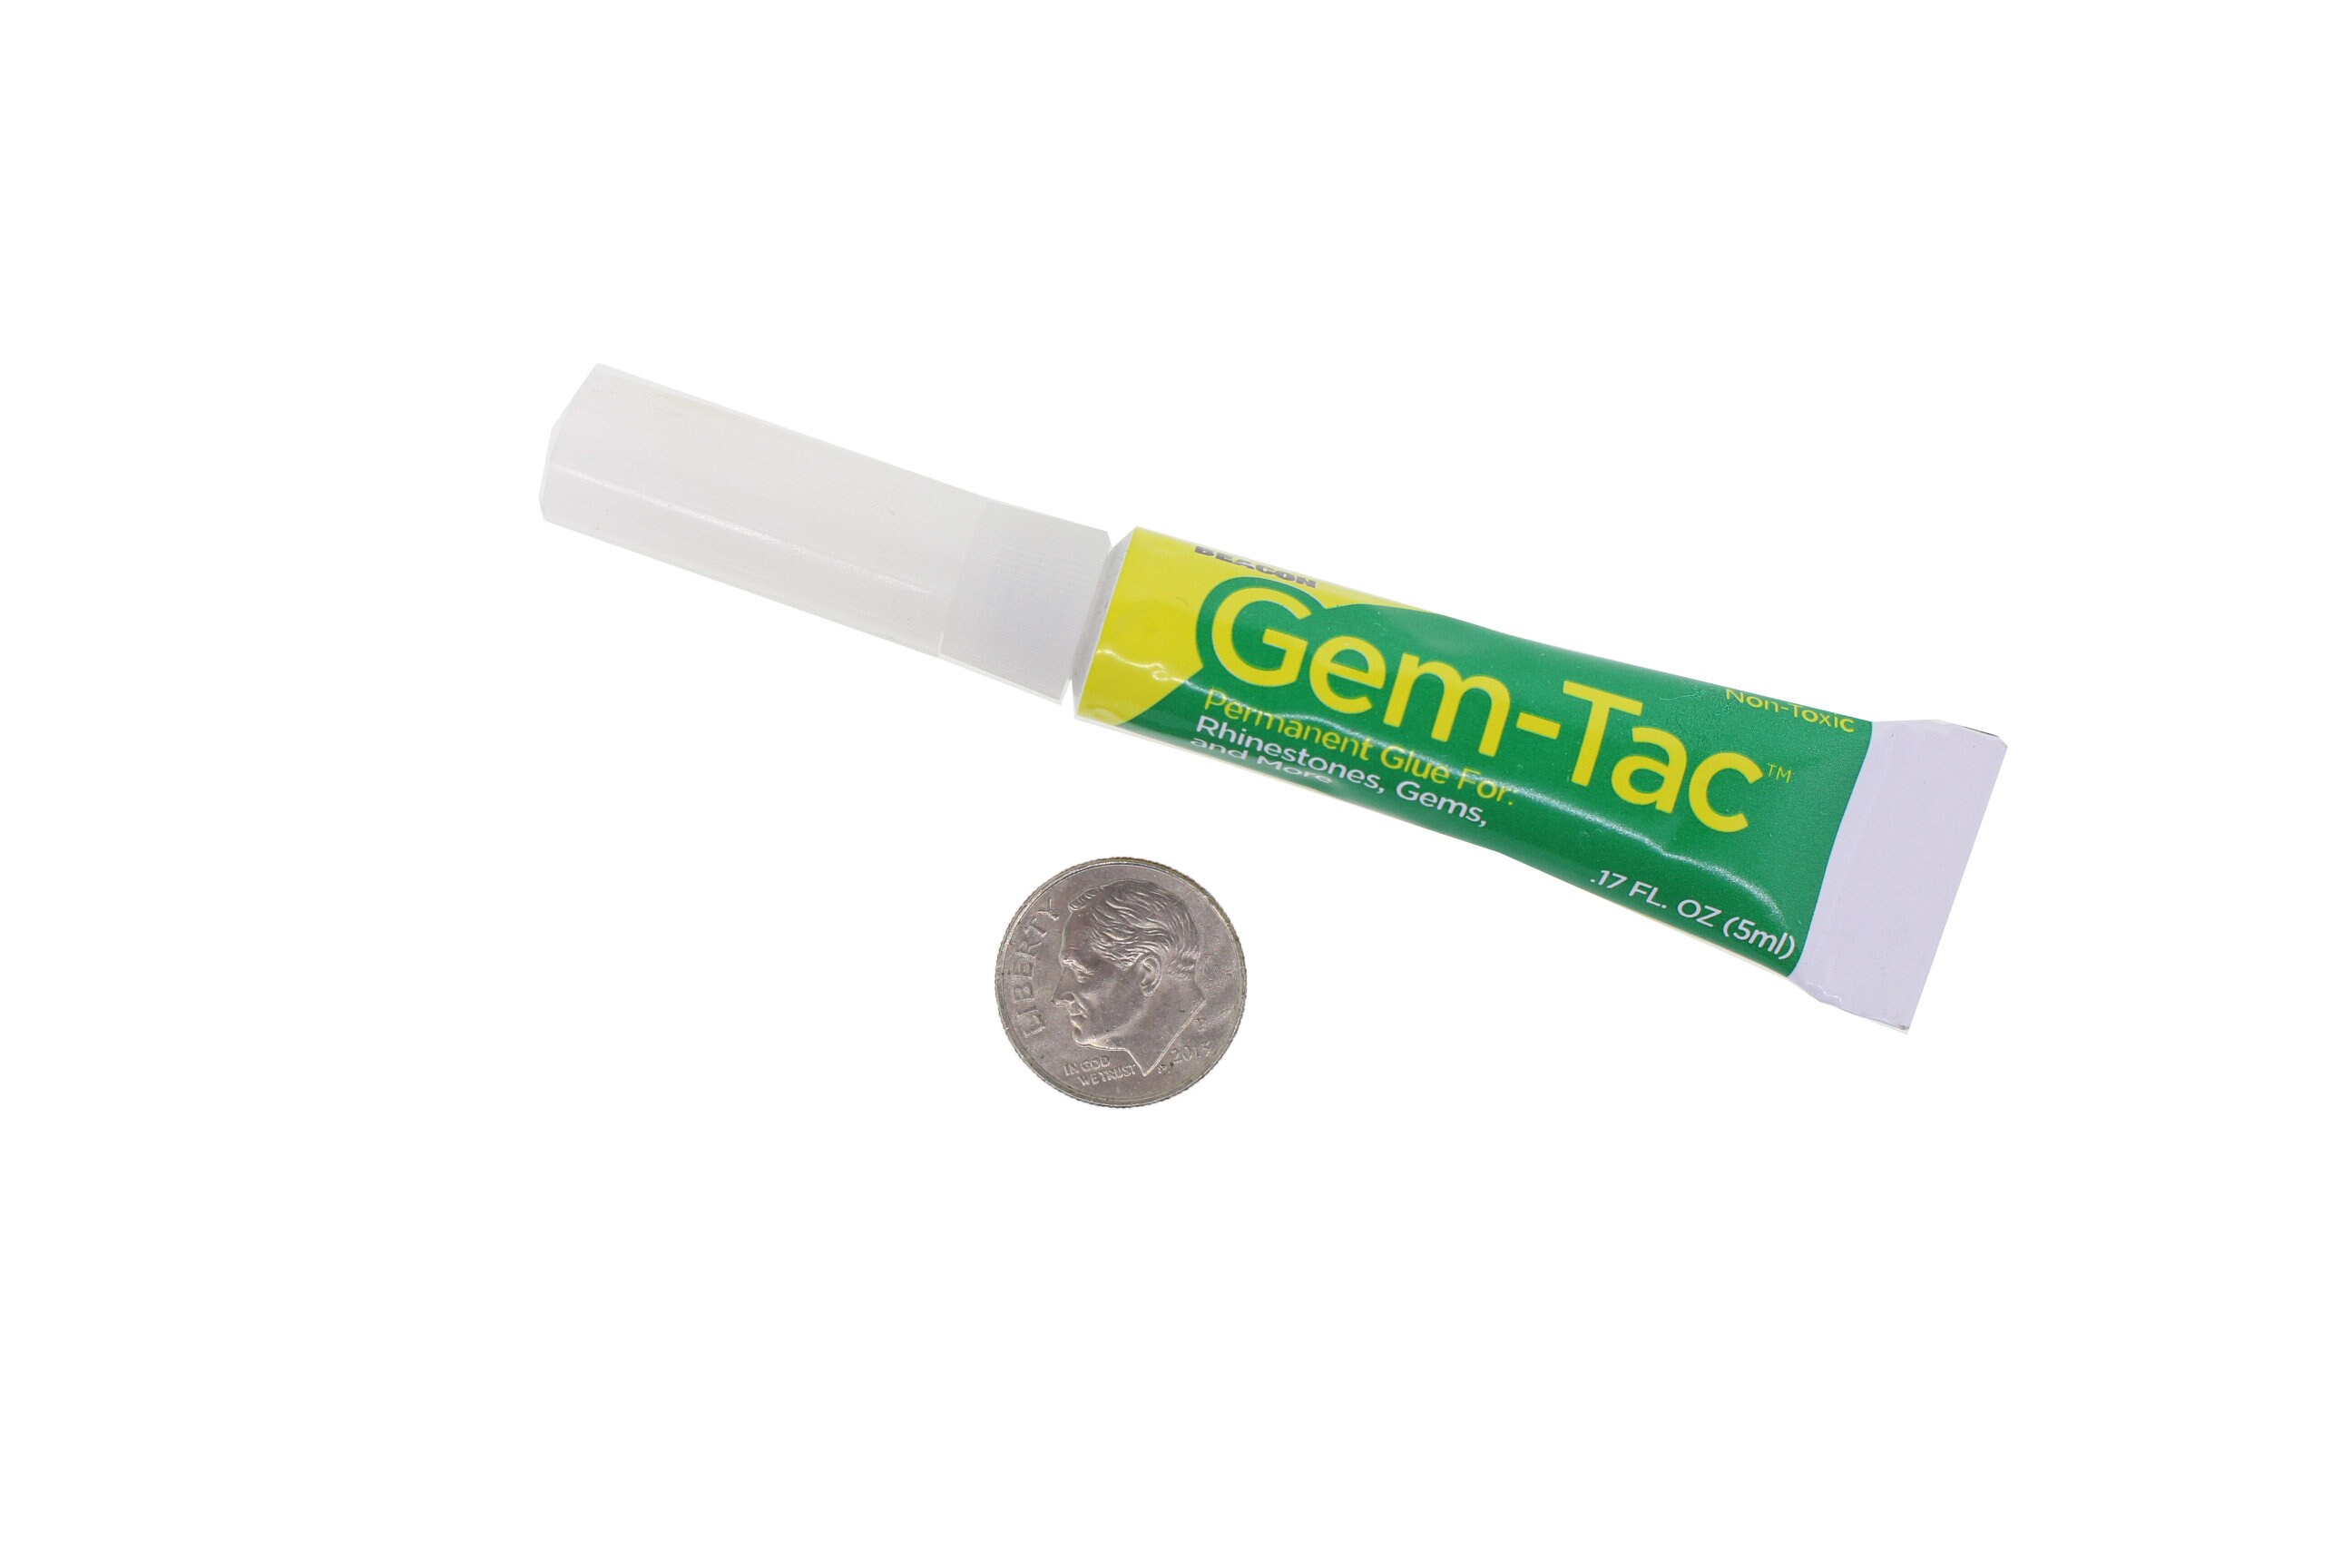 Gem Tac Fabric Glue, Mini Tubes